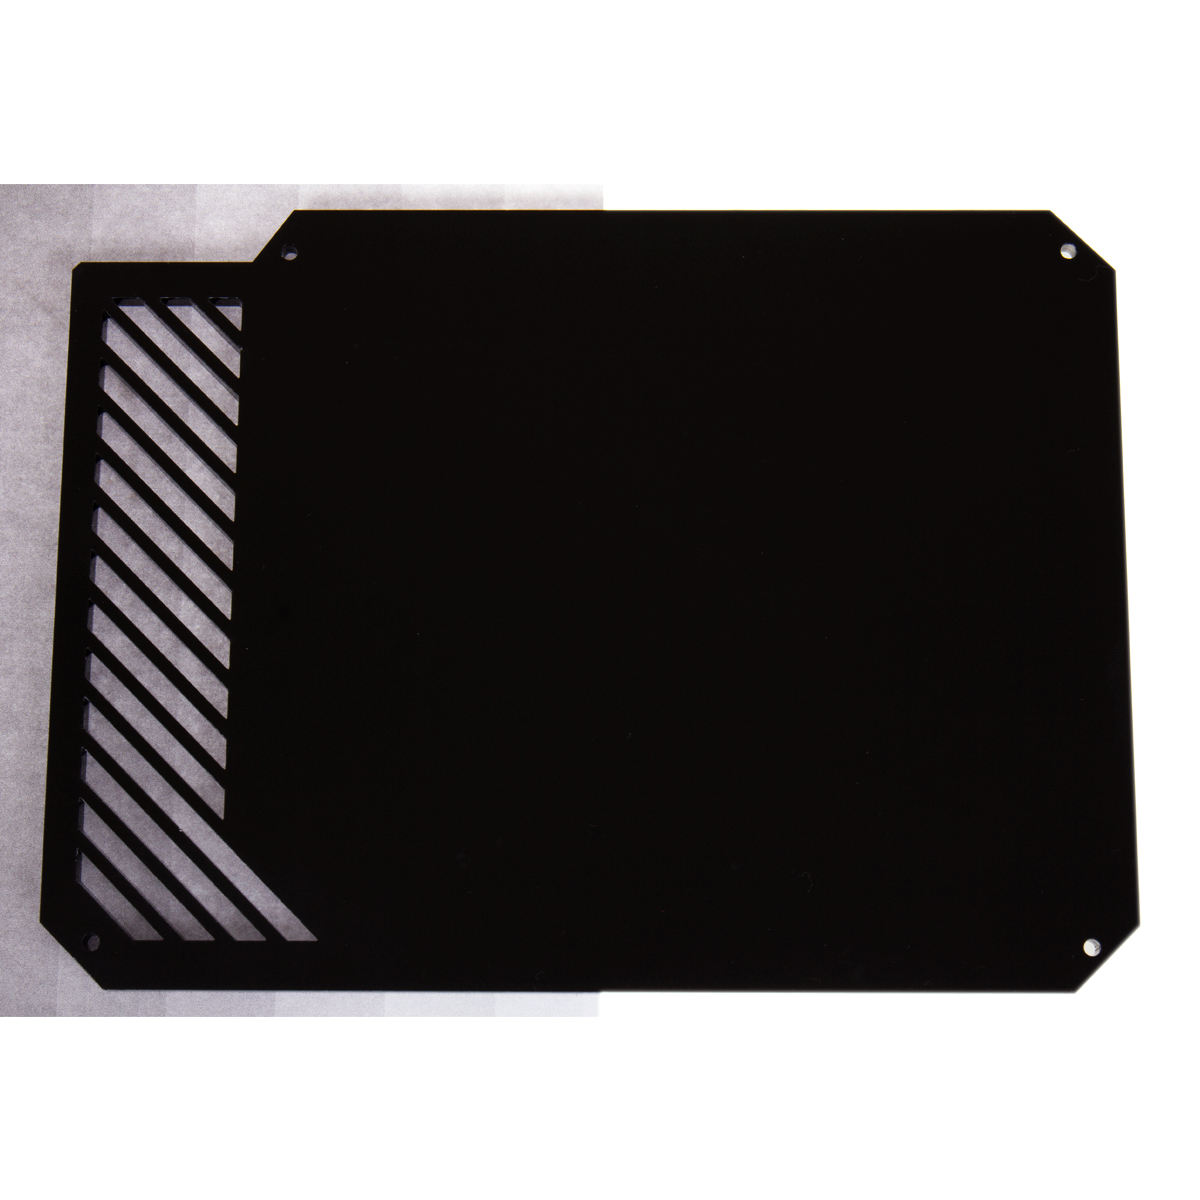 Lazer3D - Lazer3D LZ7 Front Panel - Midnight Black